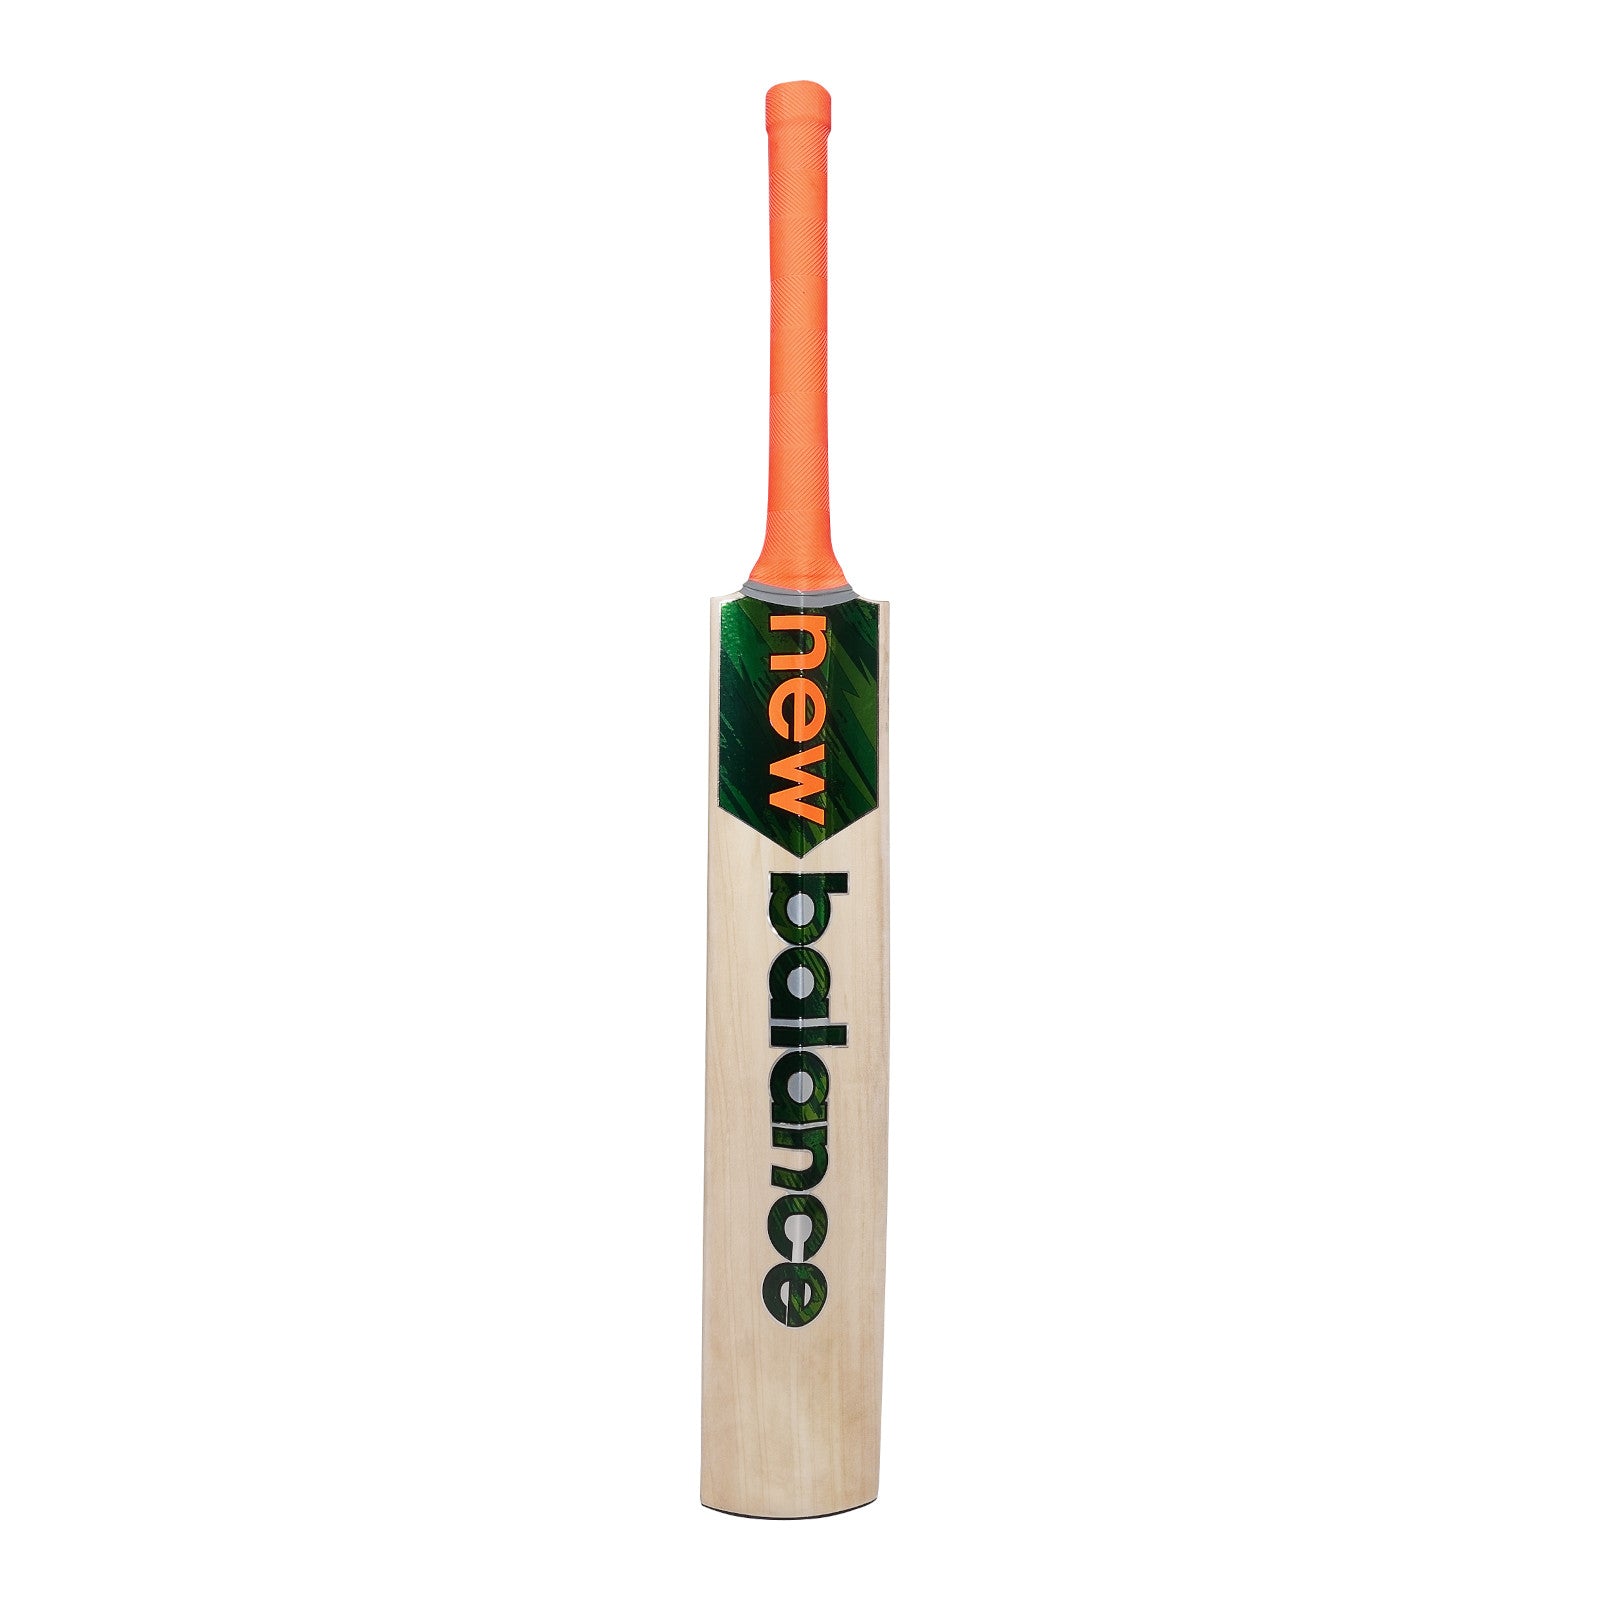 New Balance DC 380 Junior Cricket Bat